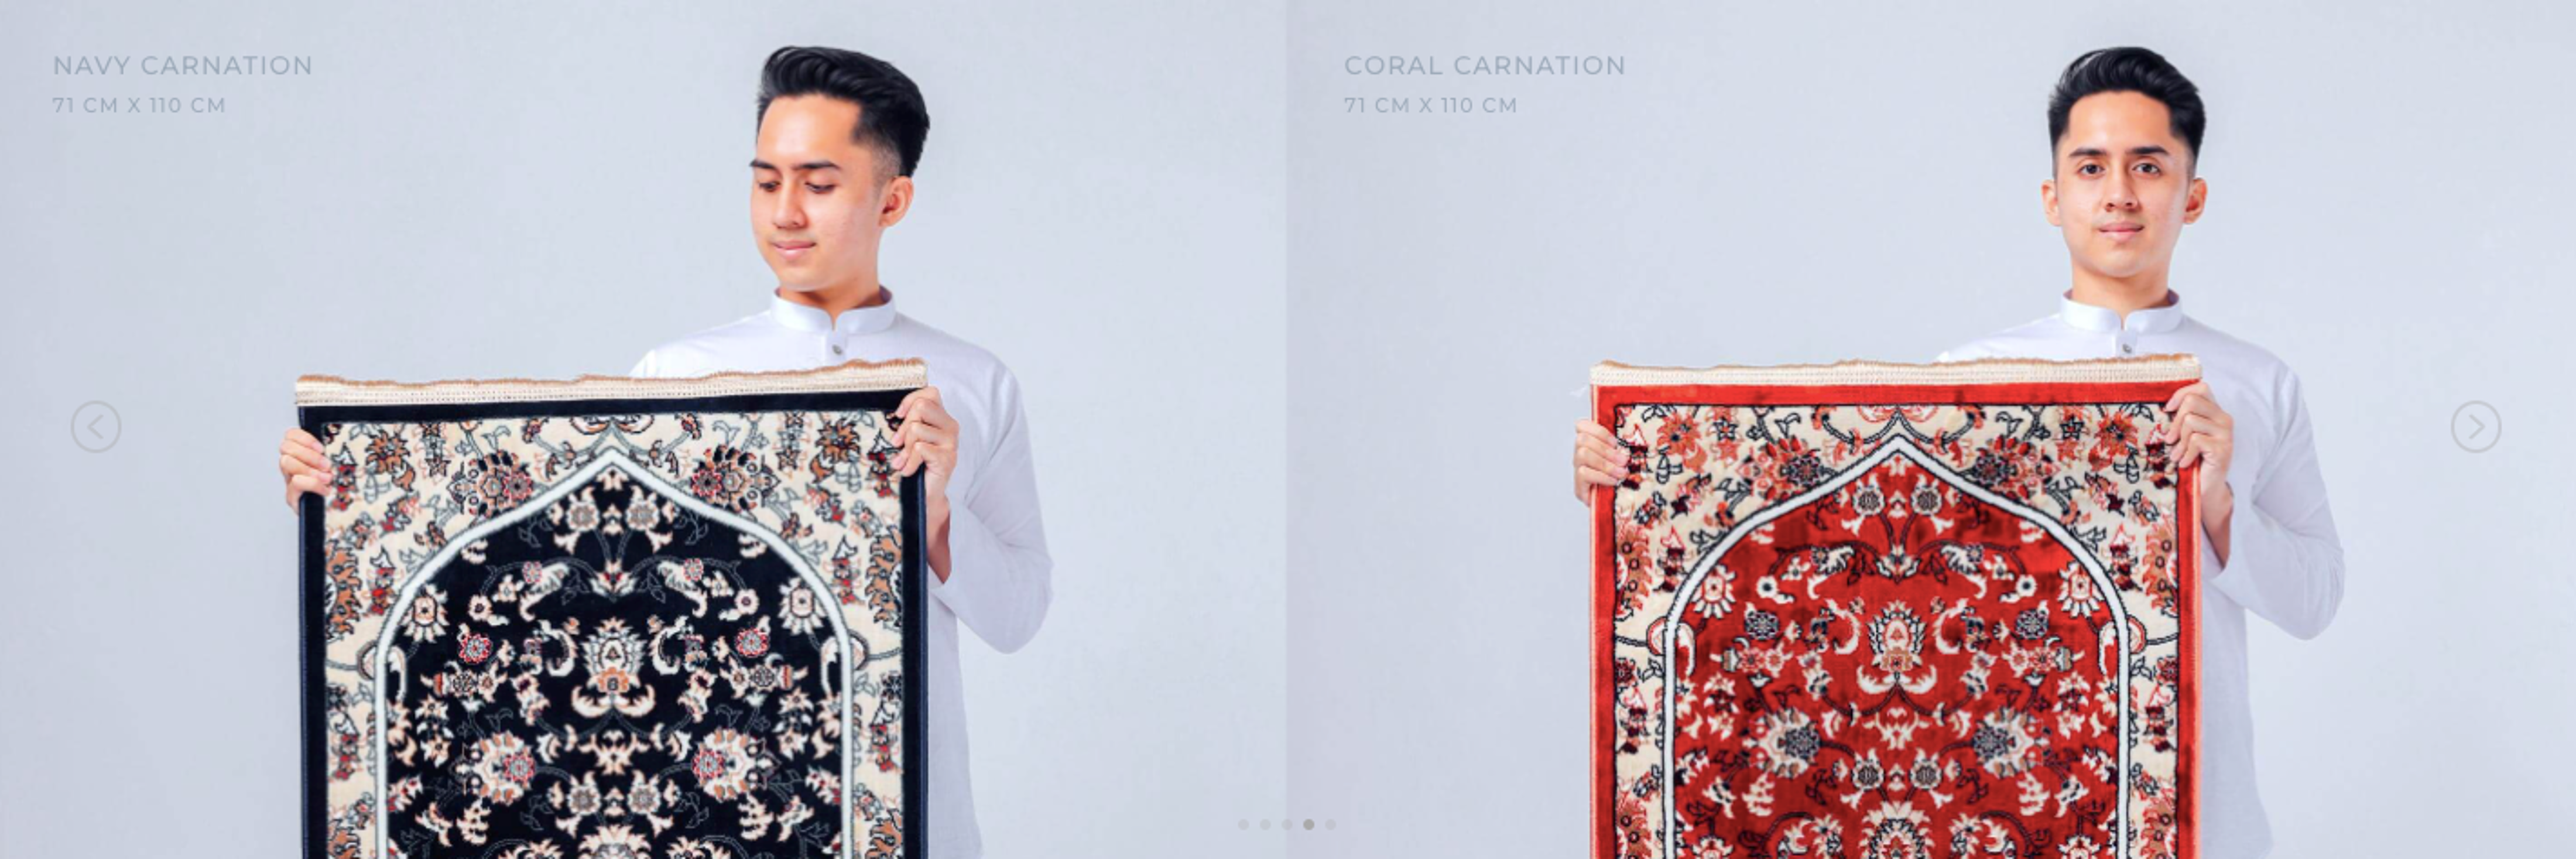 AMRU Prayer Mat Ottoman - Safiye Coral Carnation